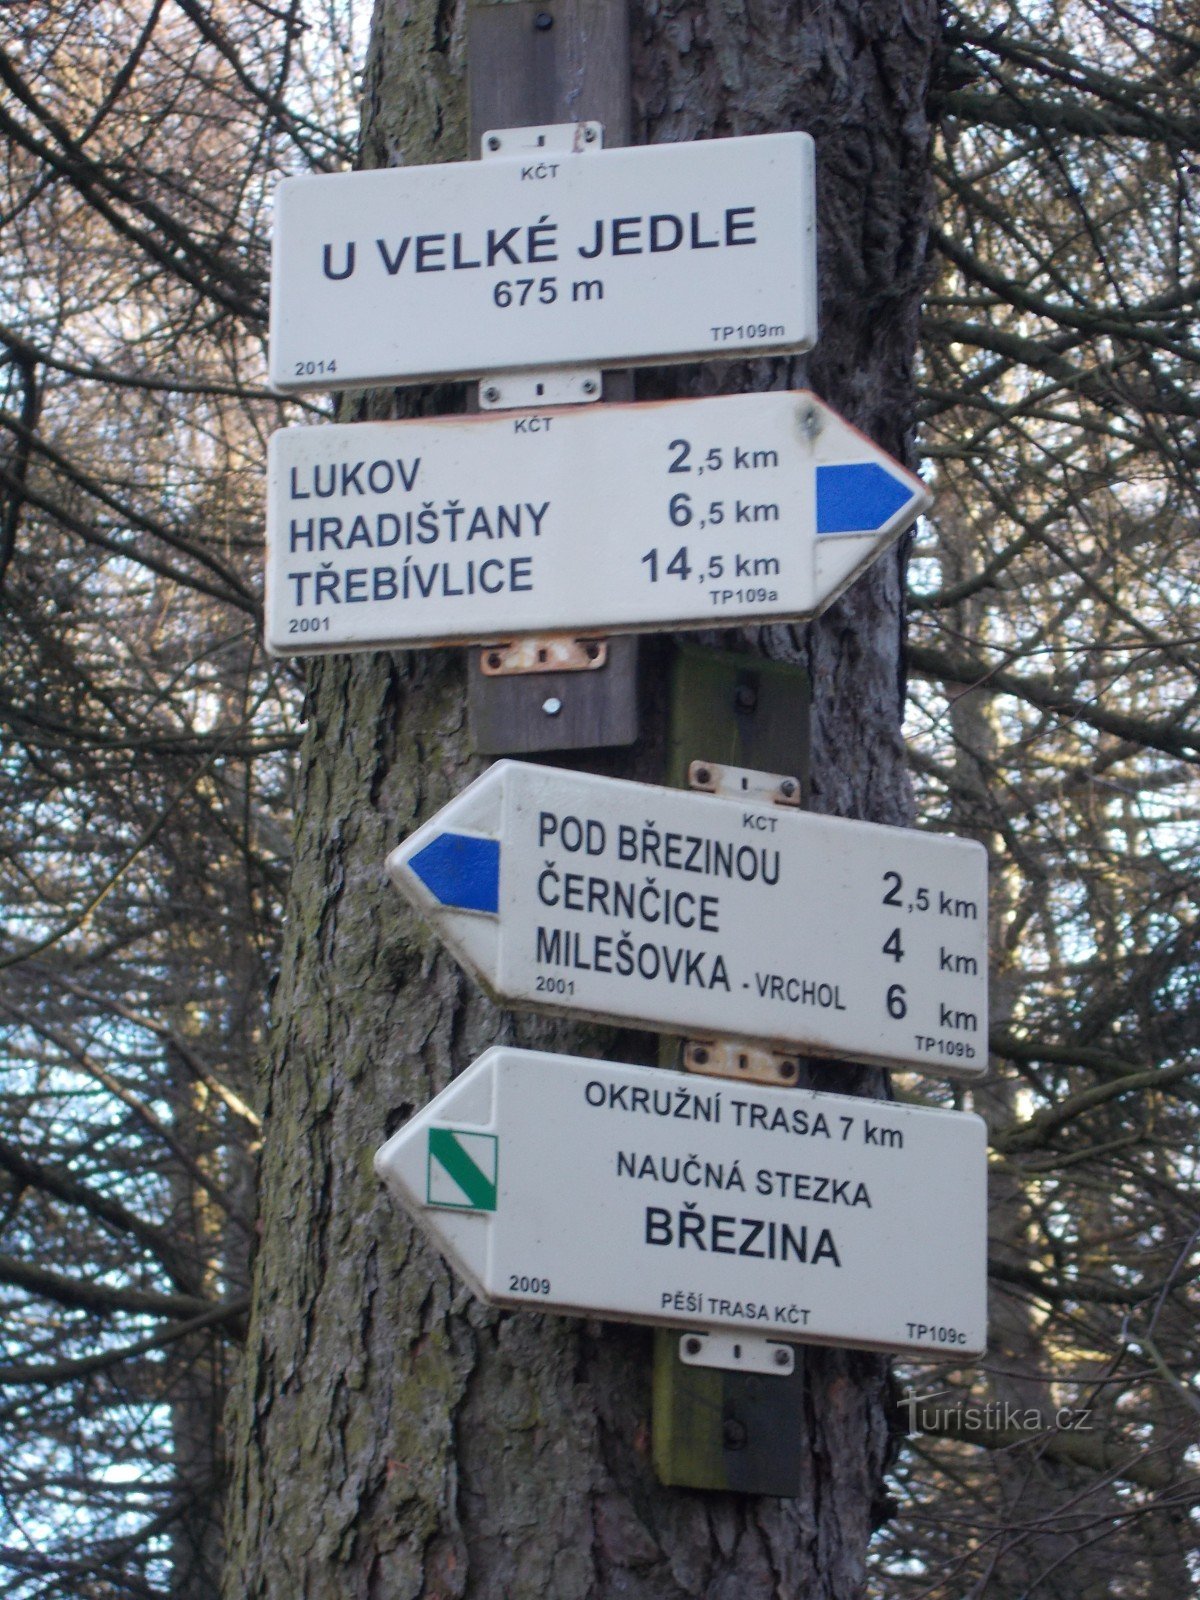 Poste indicador cerca de Velká Jedle.